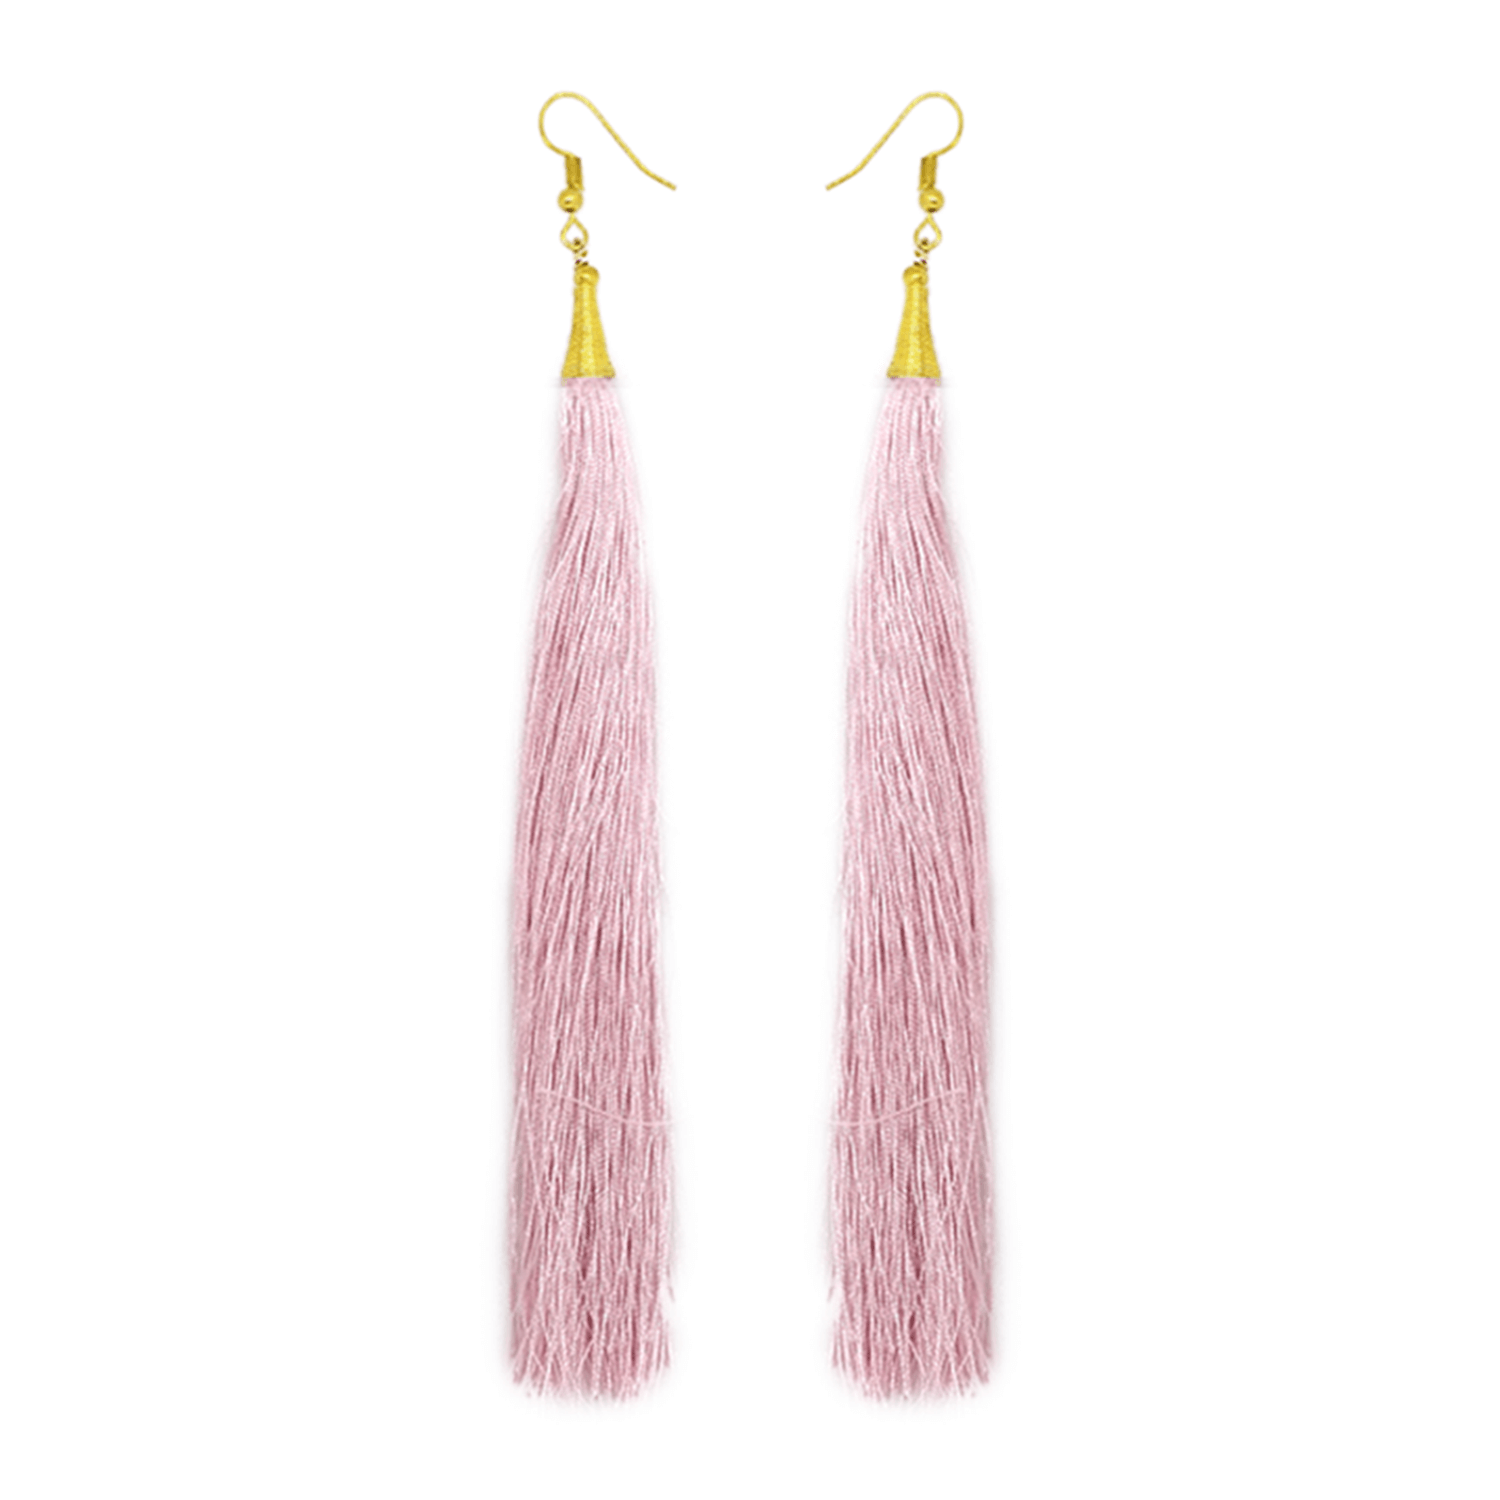 handmade earring ideas light pink color